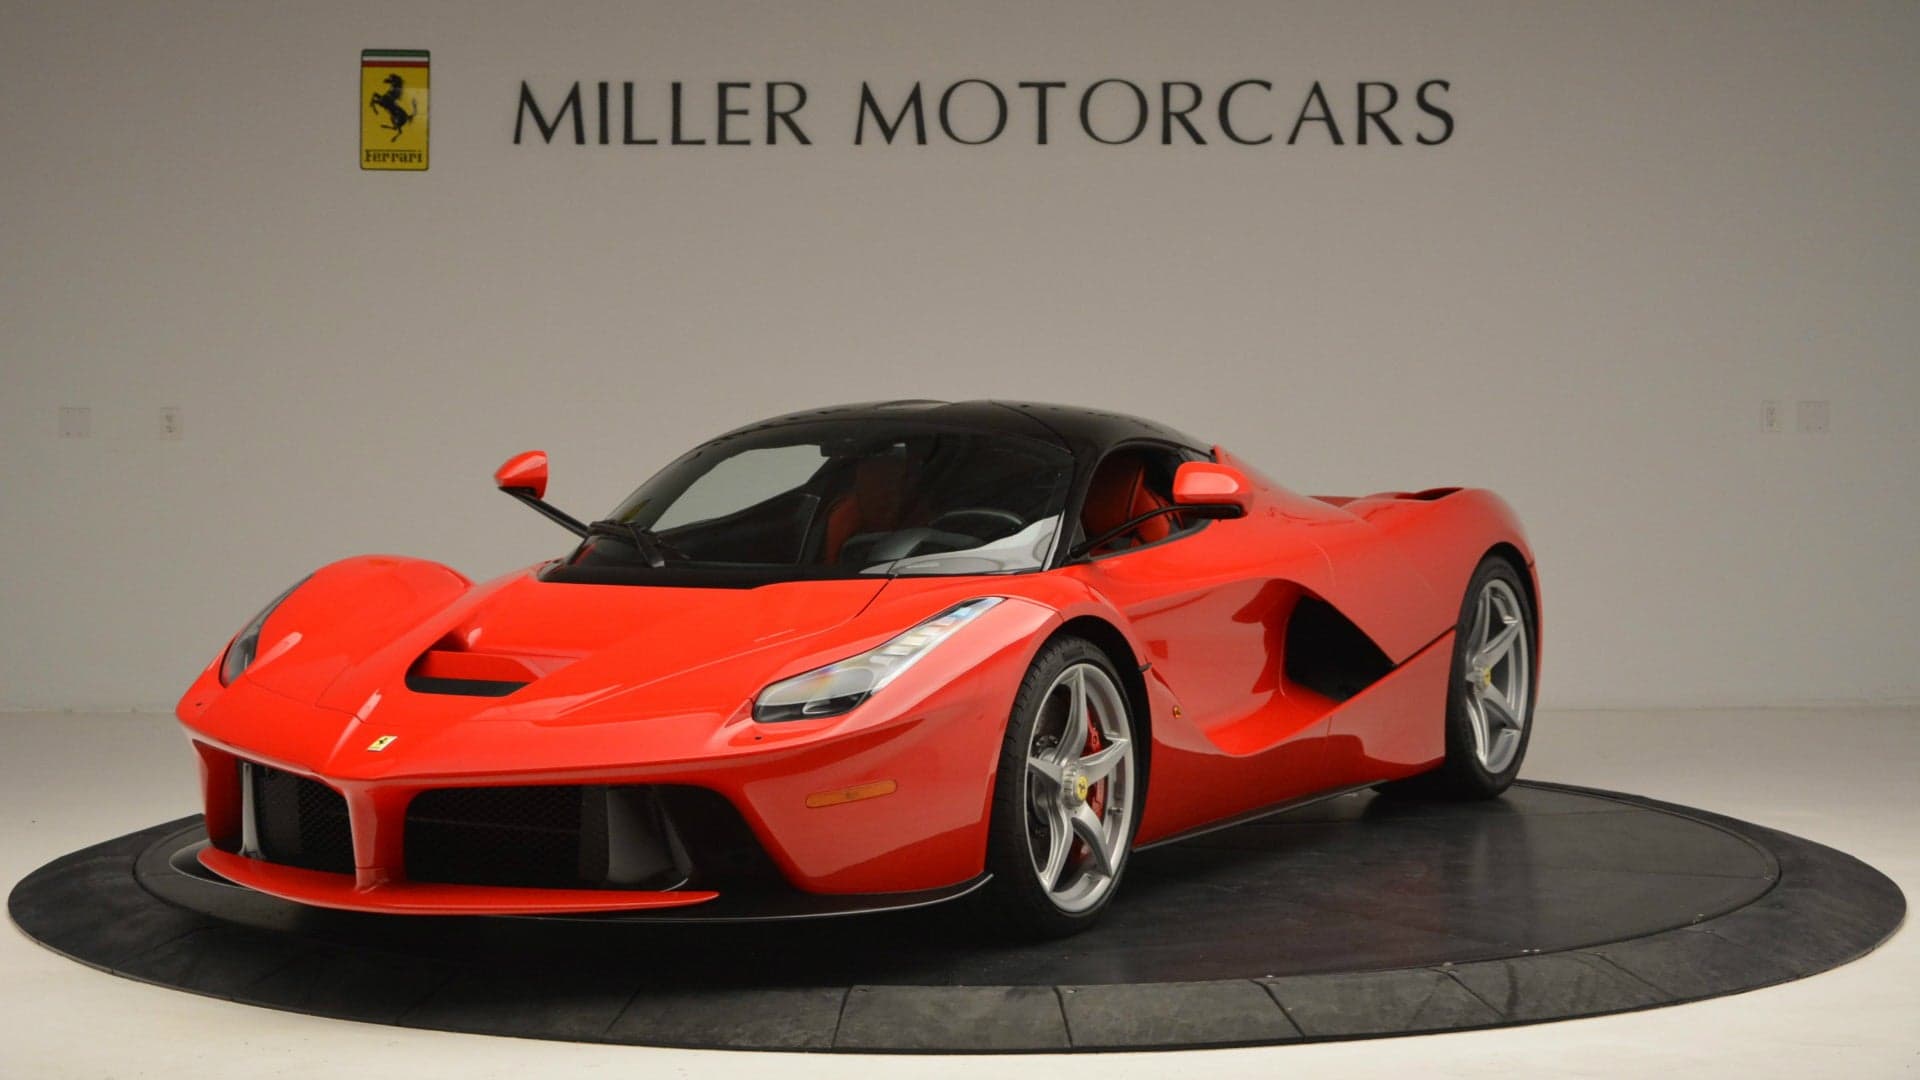 This 2015 Ferrari LaFerrari is for Sale for $3.8 Million